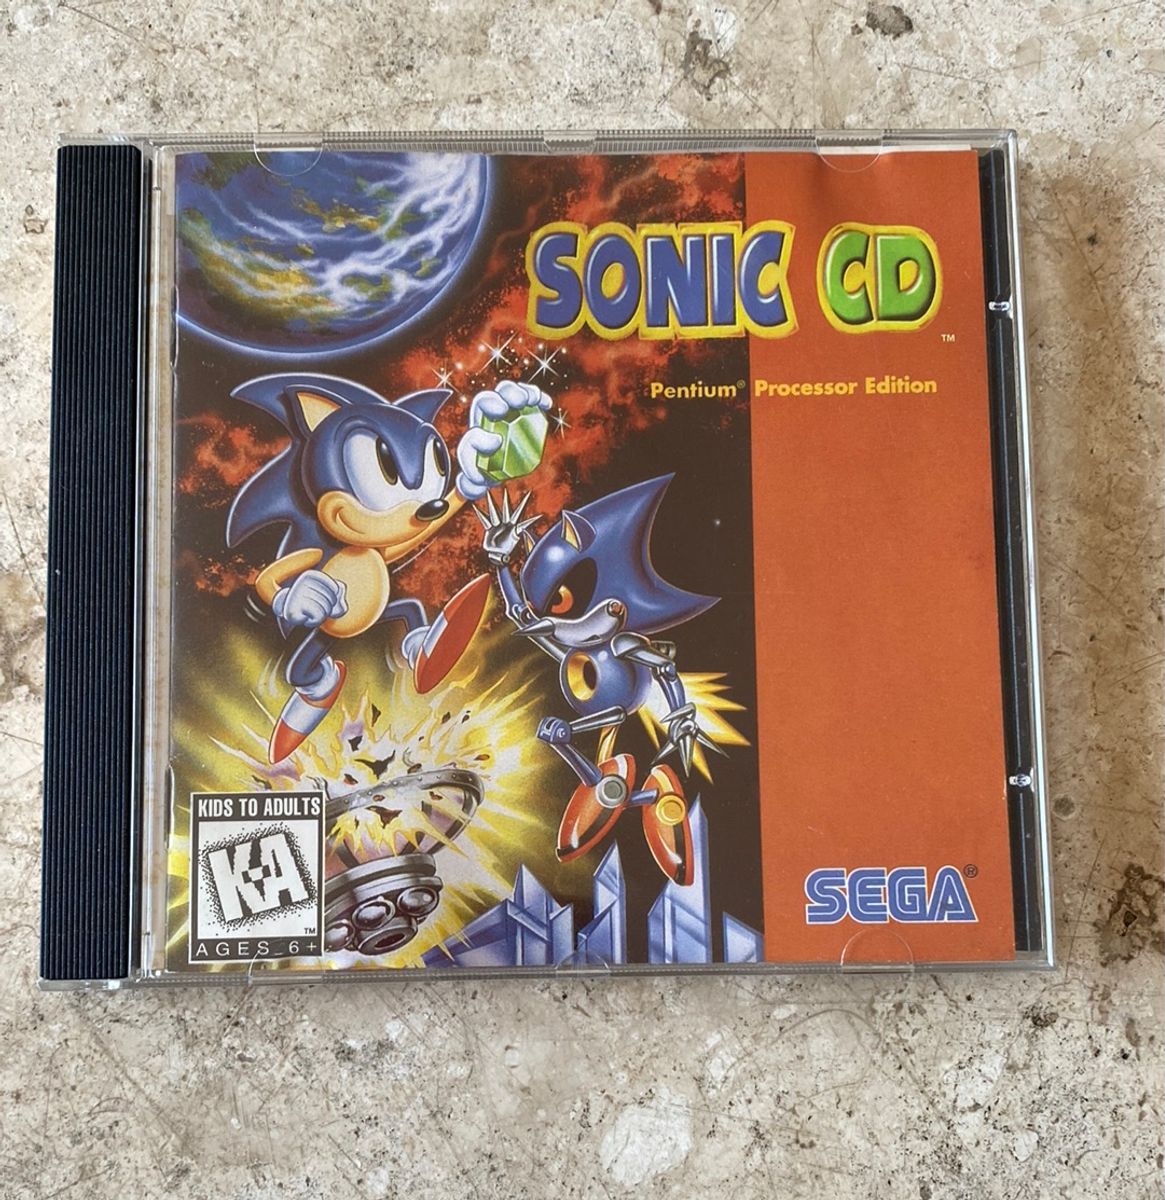 Jogo Sonic Cd Computador Vintage Windows 95 Sega Antigo